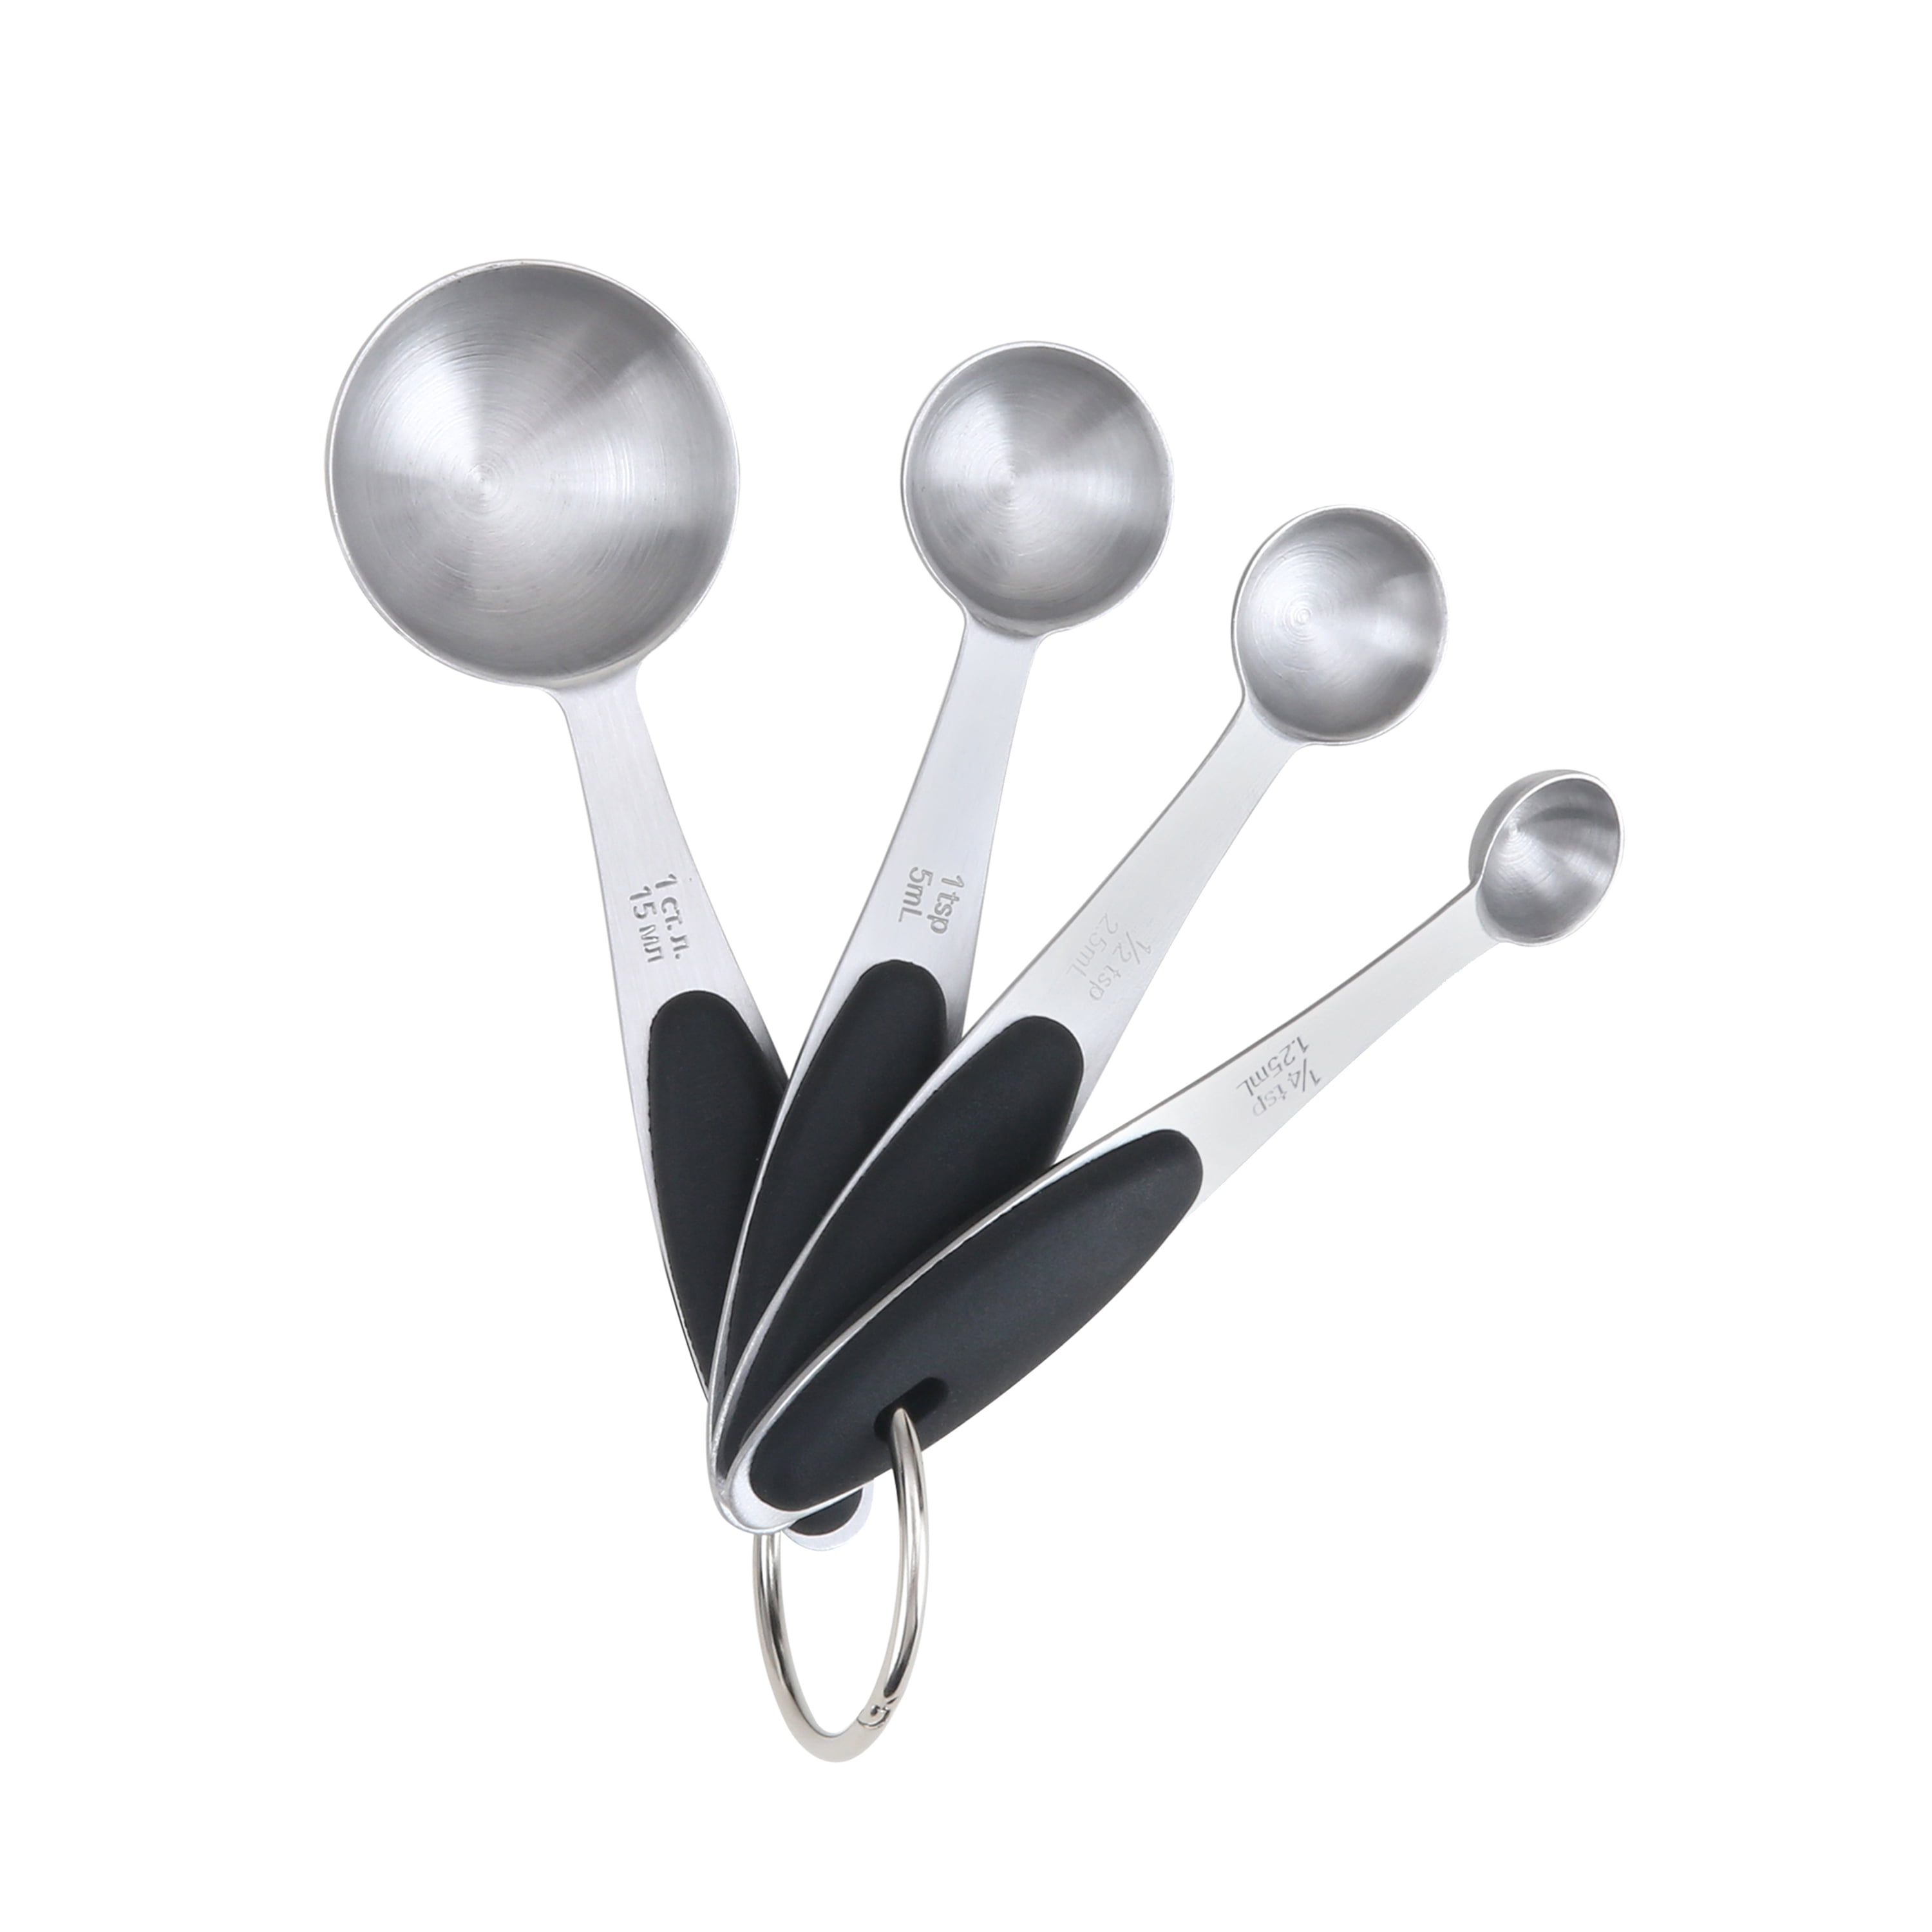 Zorveiio Stainless Steel Measuring Spoons Set, Mini Measuring Spoon 1/64,  1/32, 1/16, 1/8, 1/4 tsp Metal Teaspoon Measure Spoon for Dry or Liquid